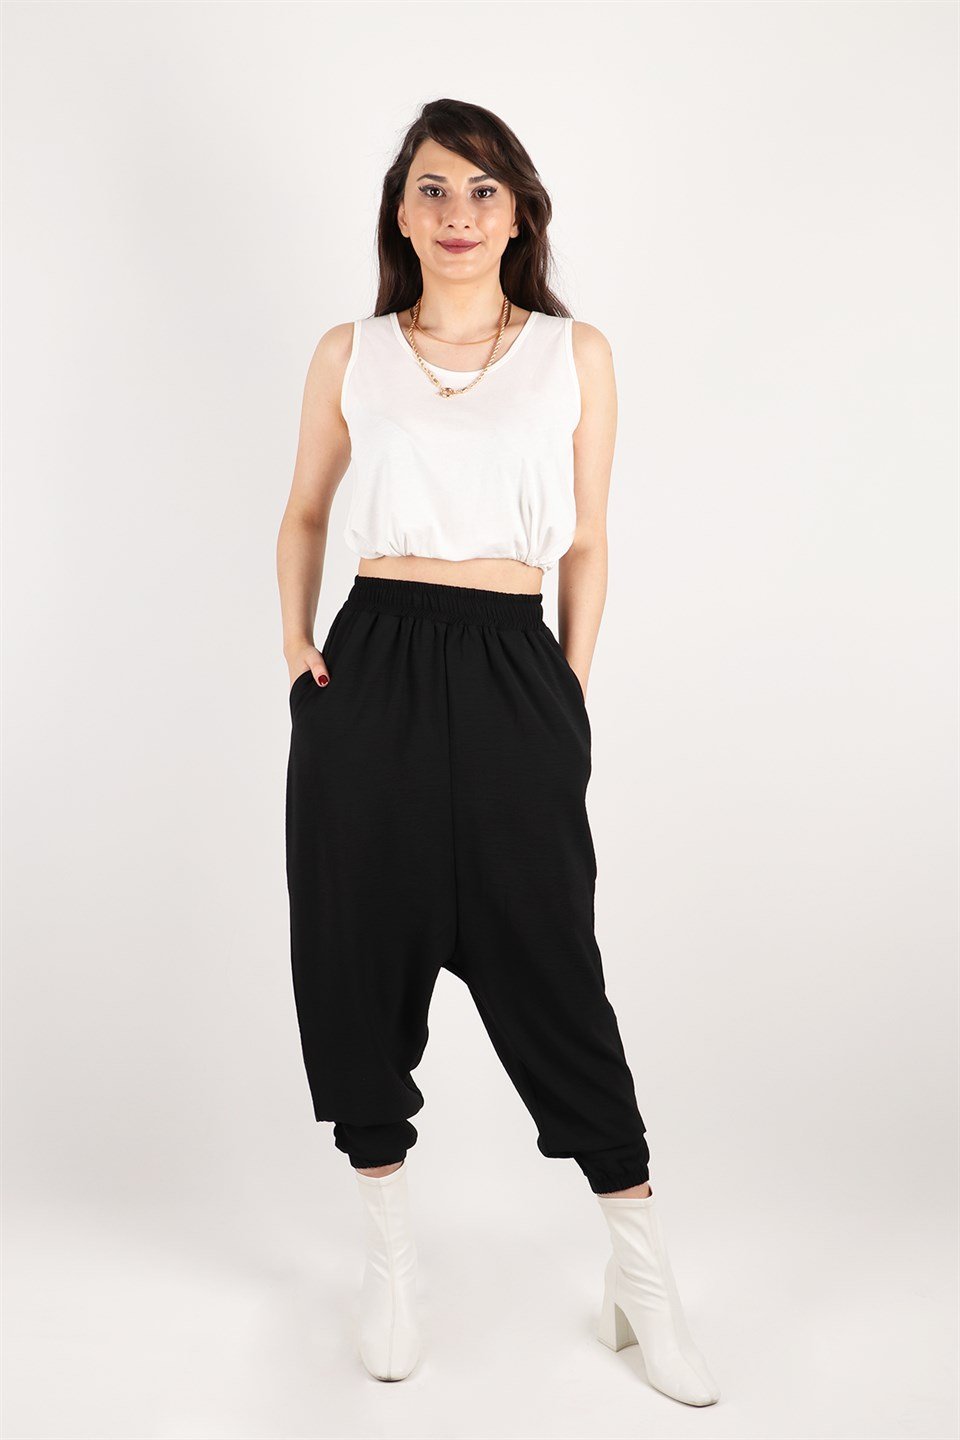 Kadın Şalvar Pantolon | Pantolon Modelleri - RICH | rich.com.tr